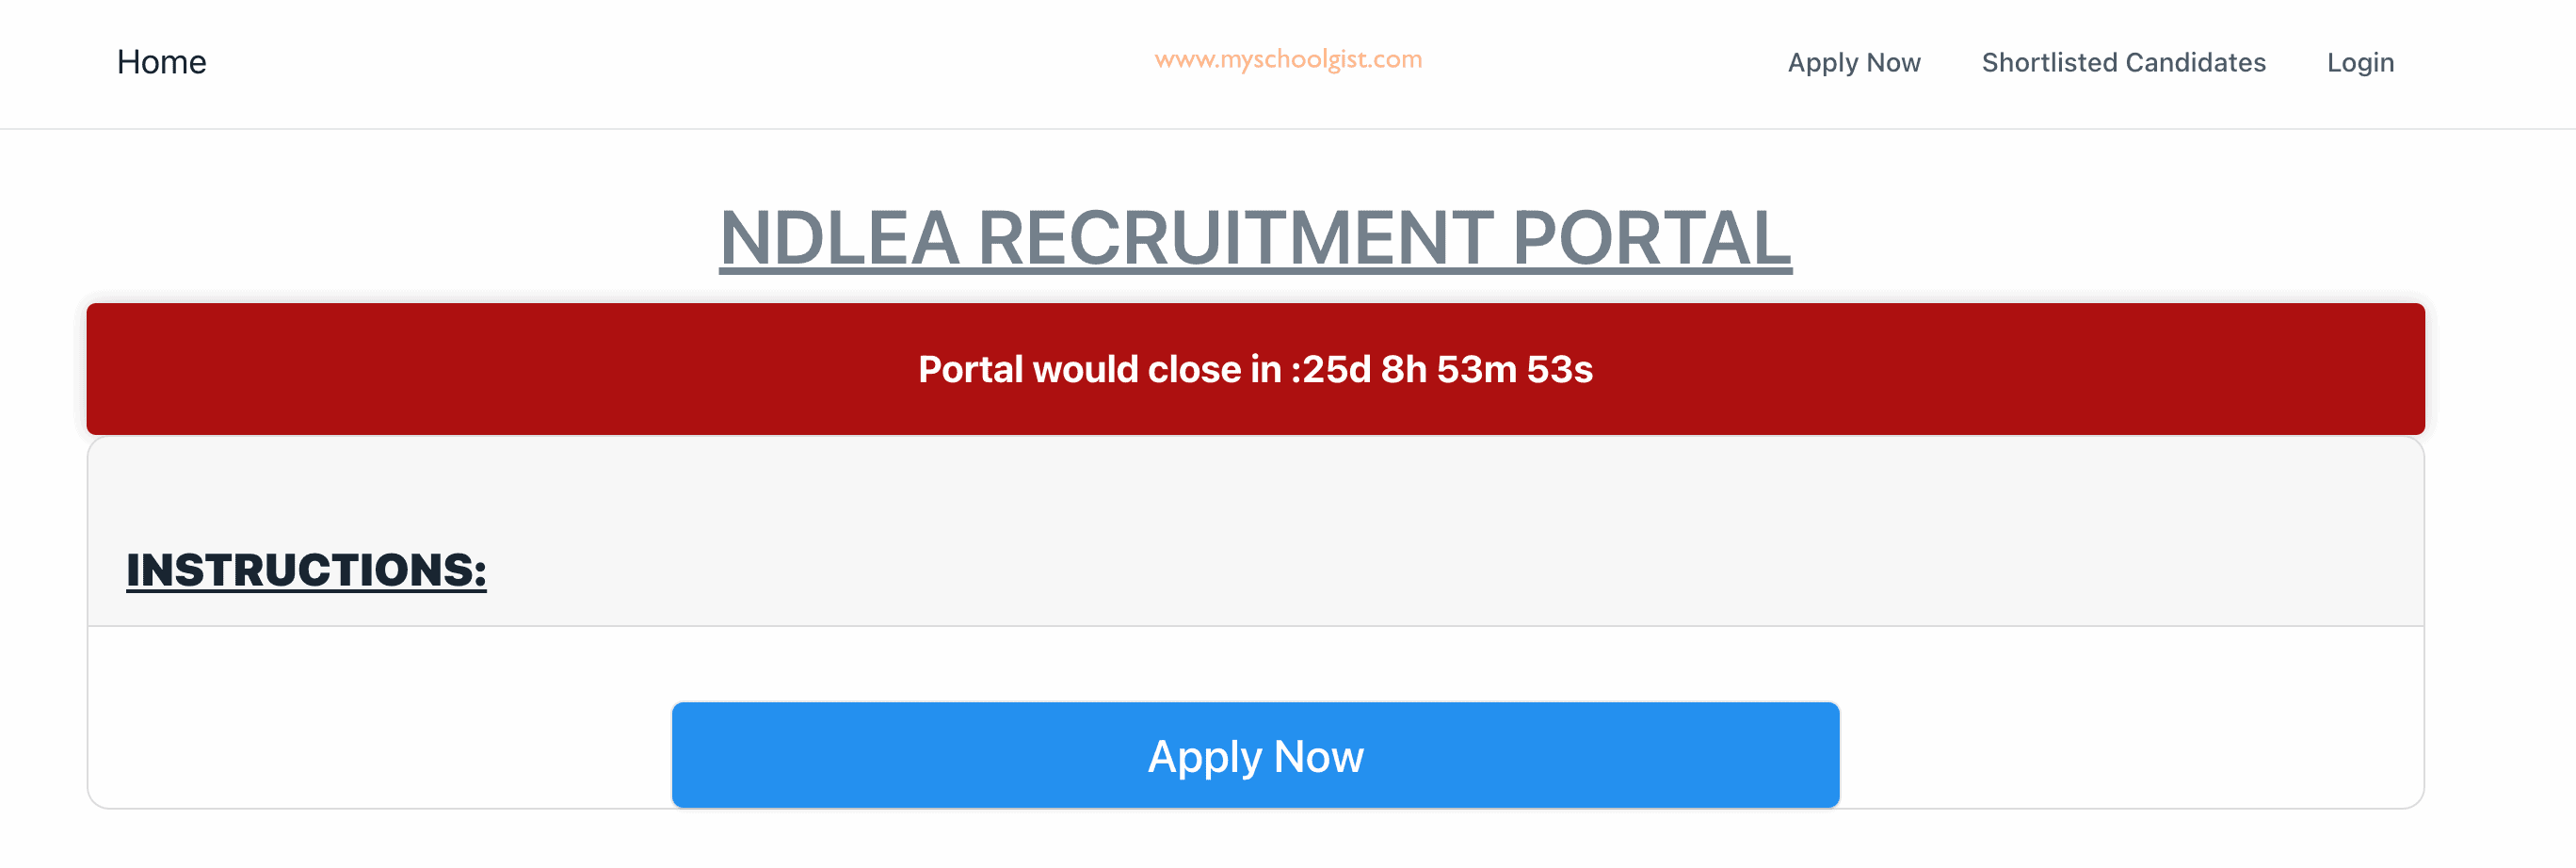 Apply Now for NDLEA Job Vacancies